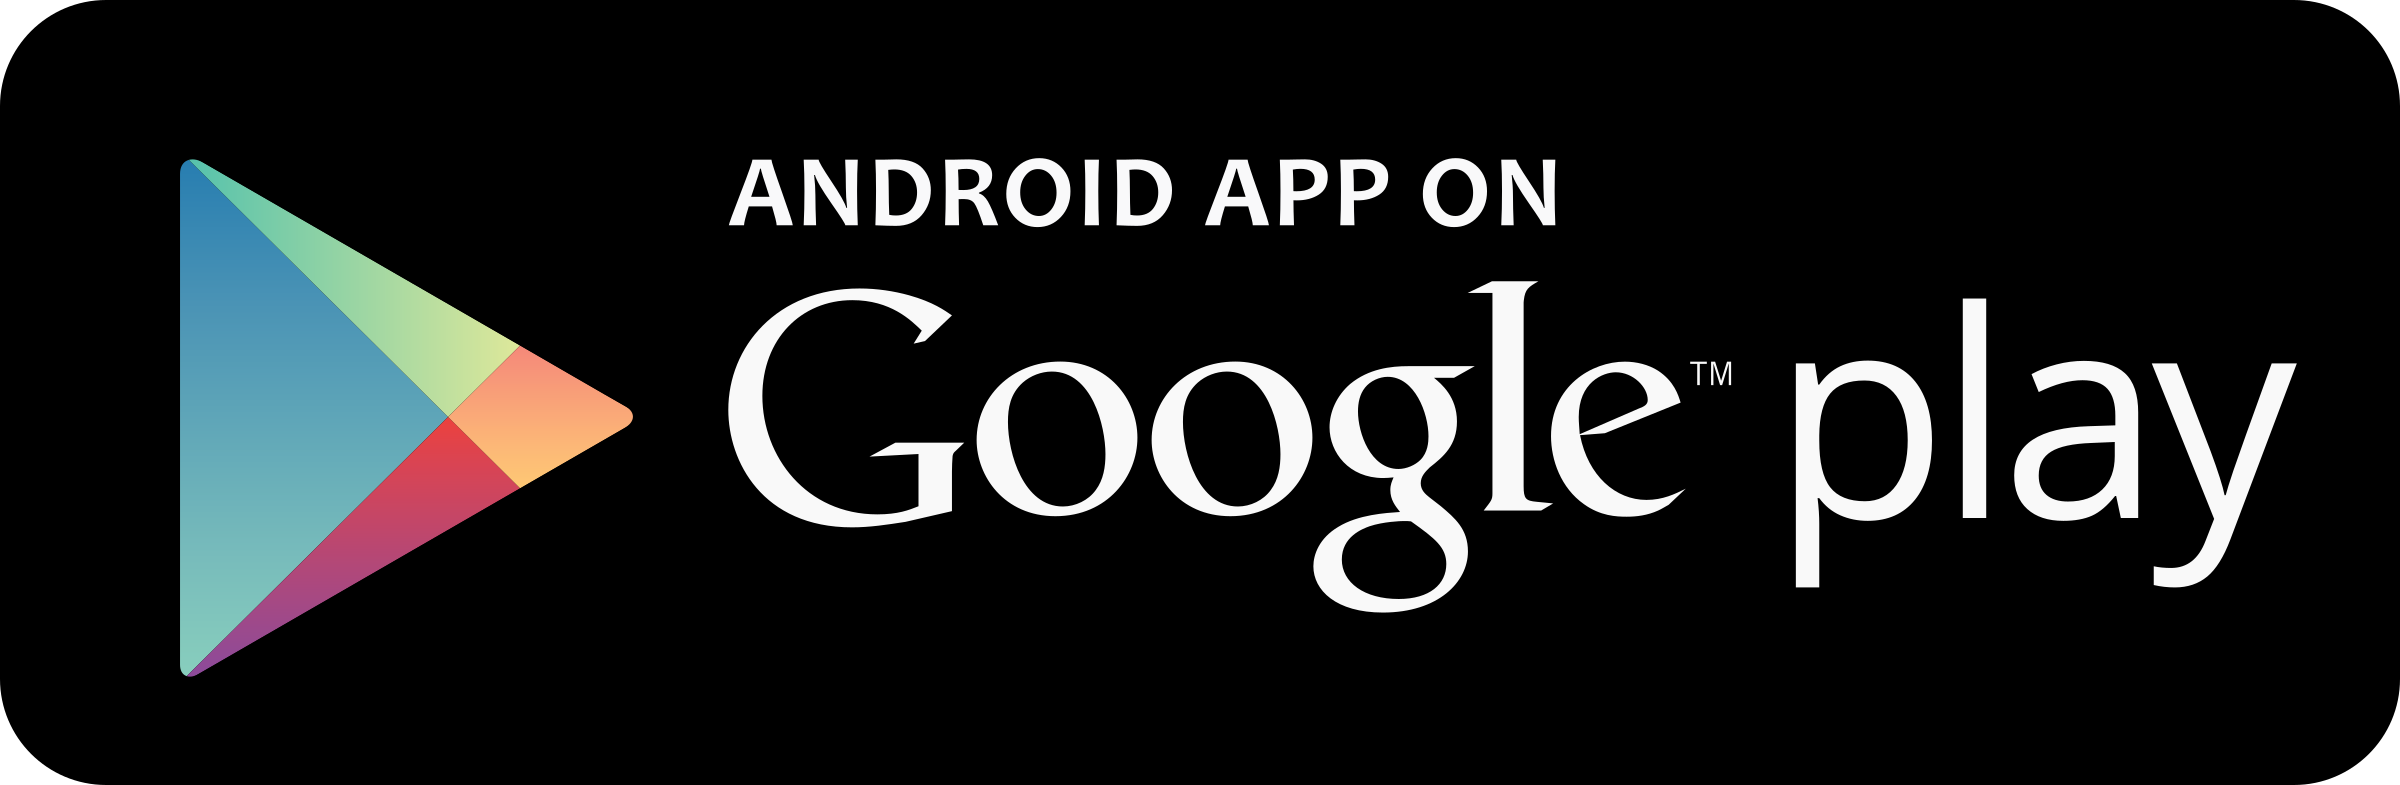 amarStudy Android App